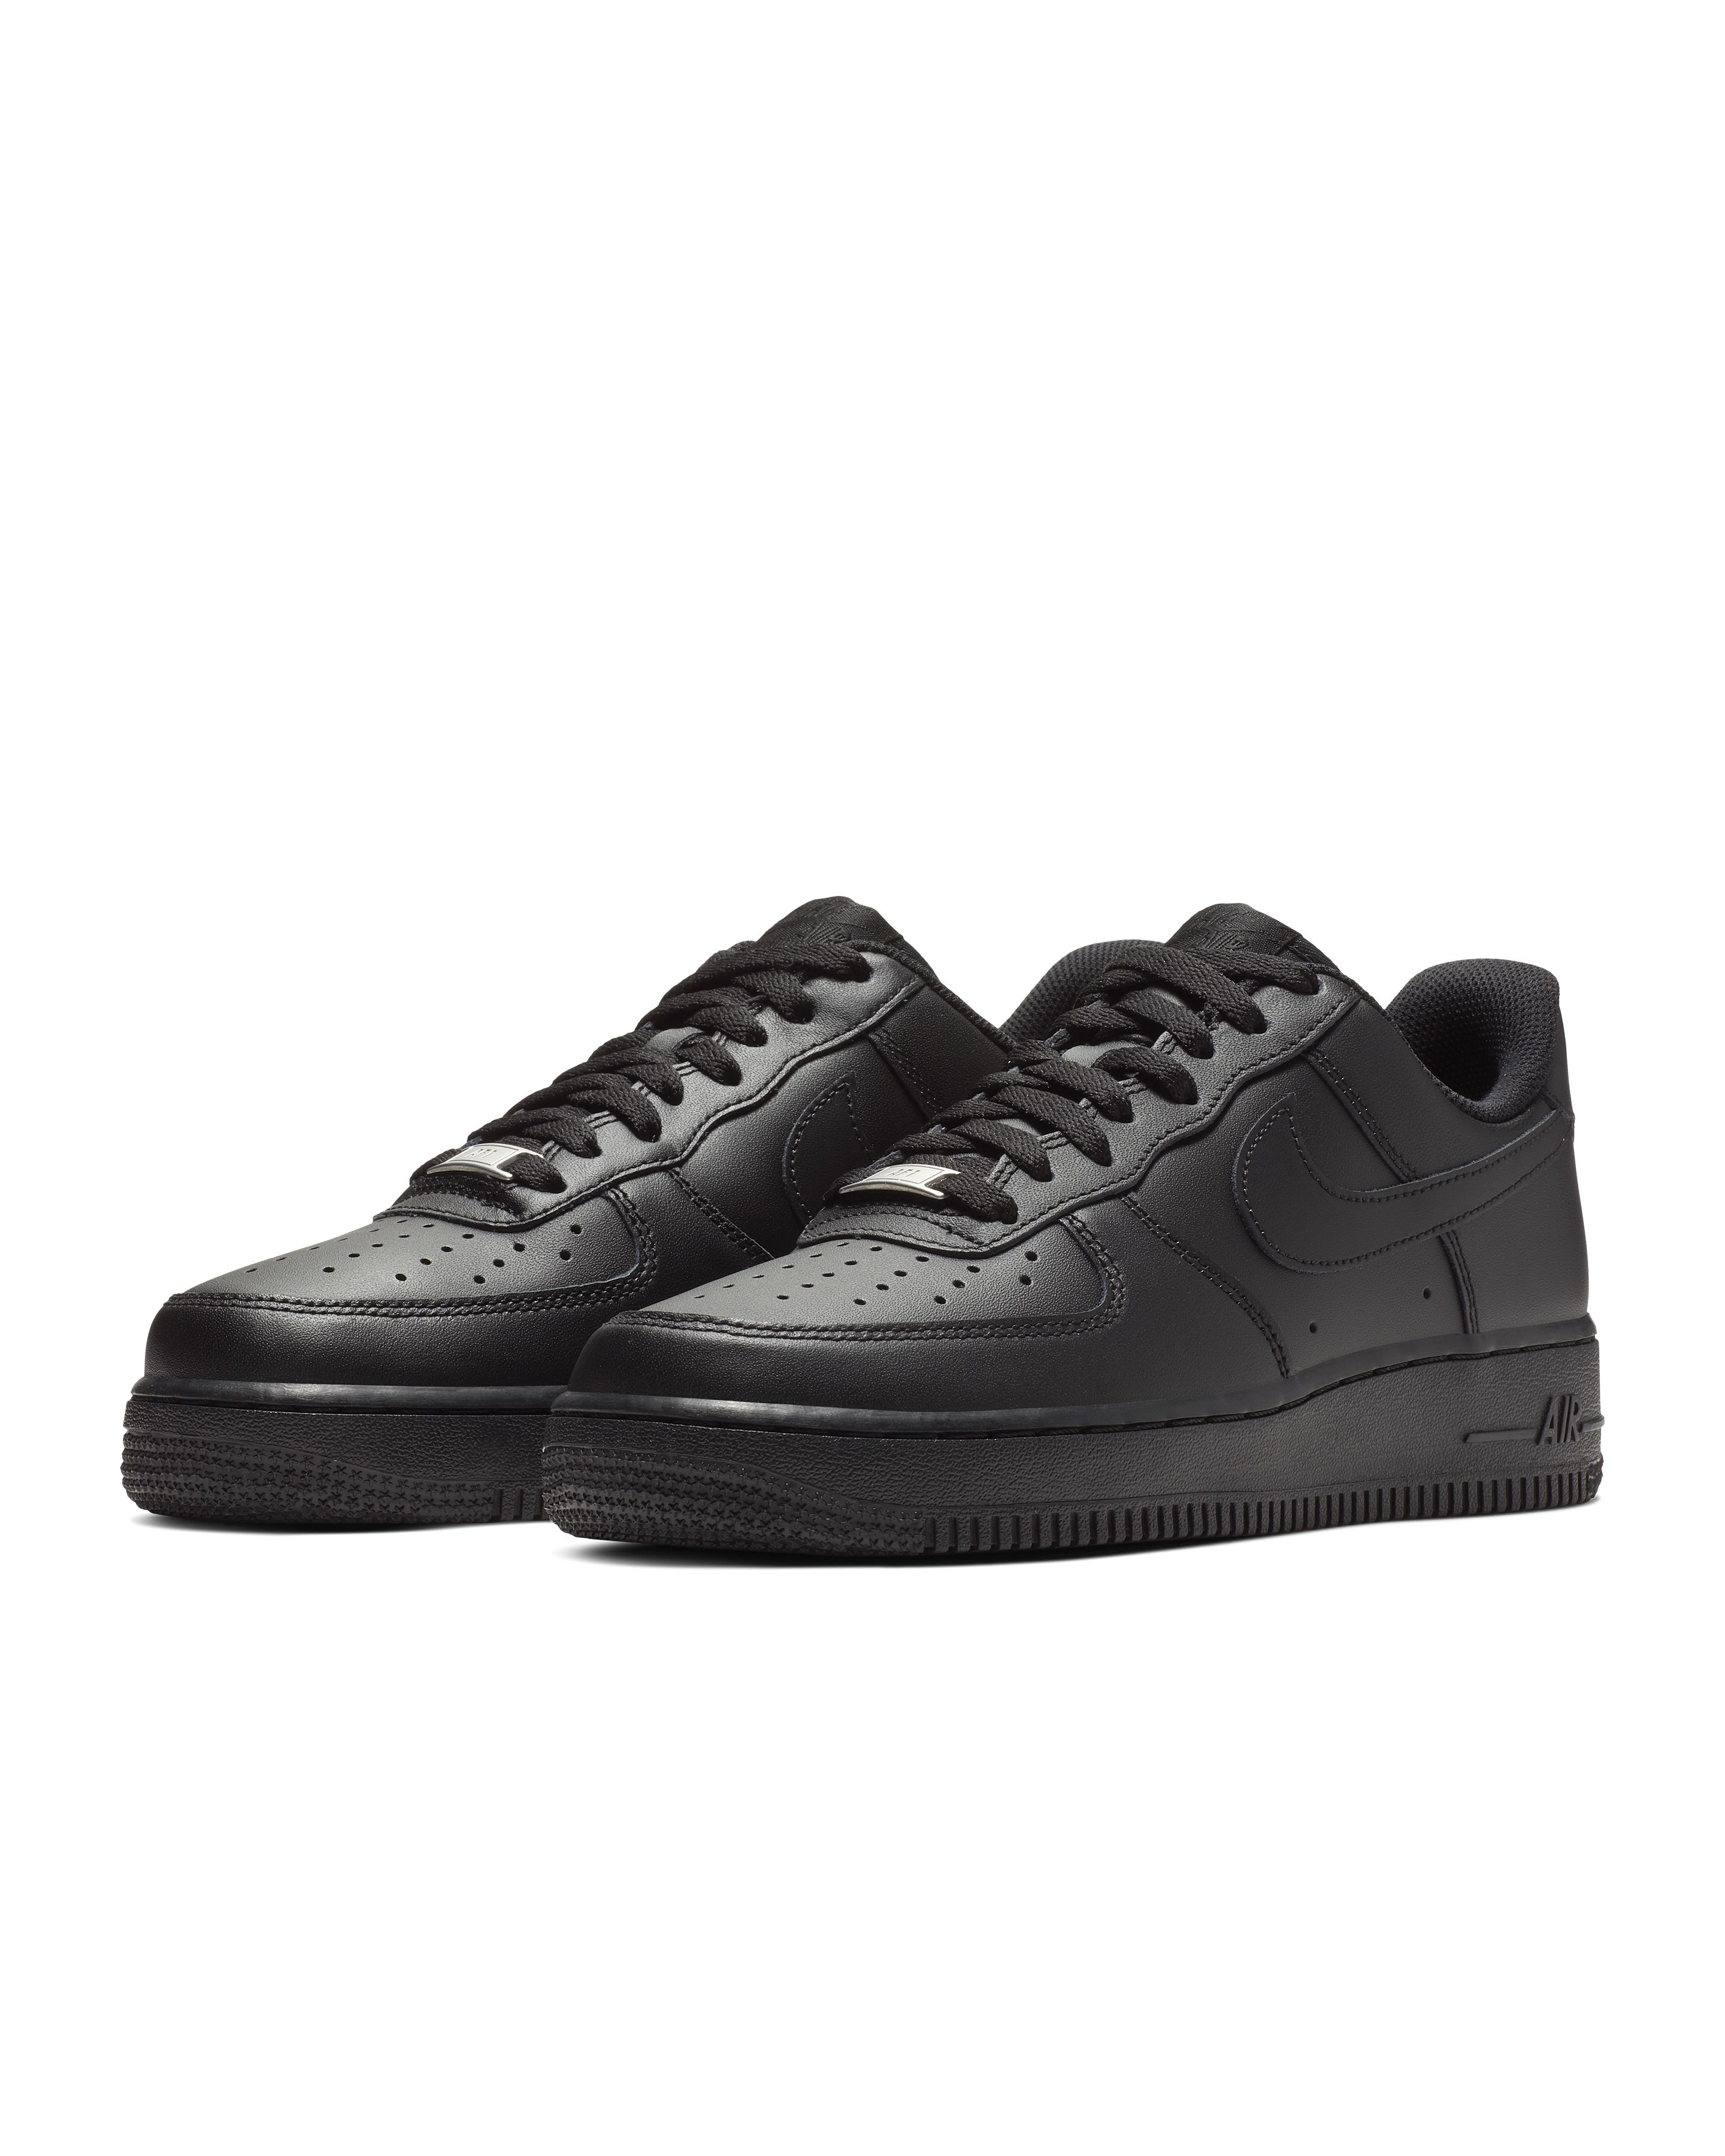 Hailey Baldwin's in Nike Air Force 1 Sneakers, Maison Margiela Pants –  Footwear News